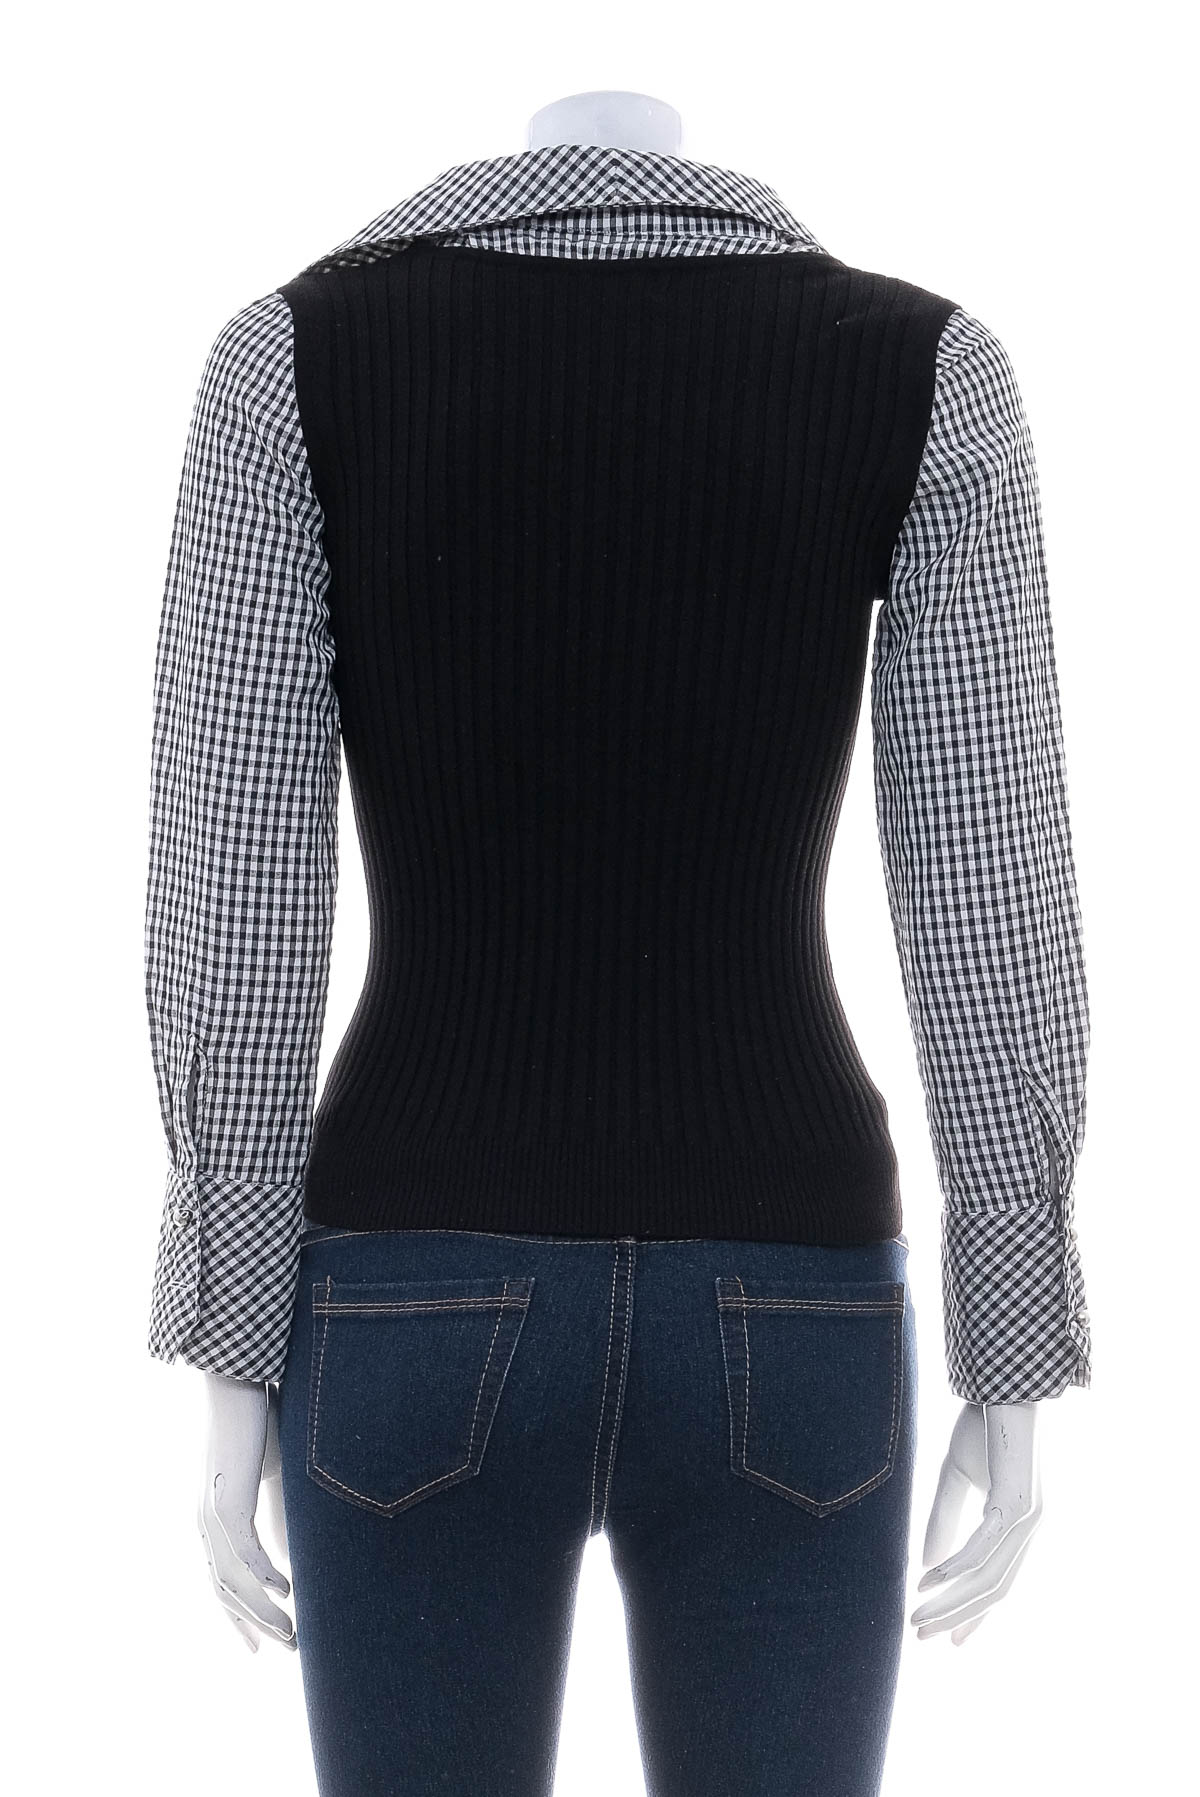 Women's sweater - Baiyi - 1